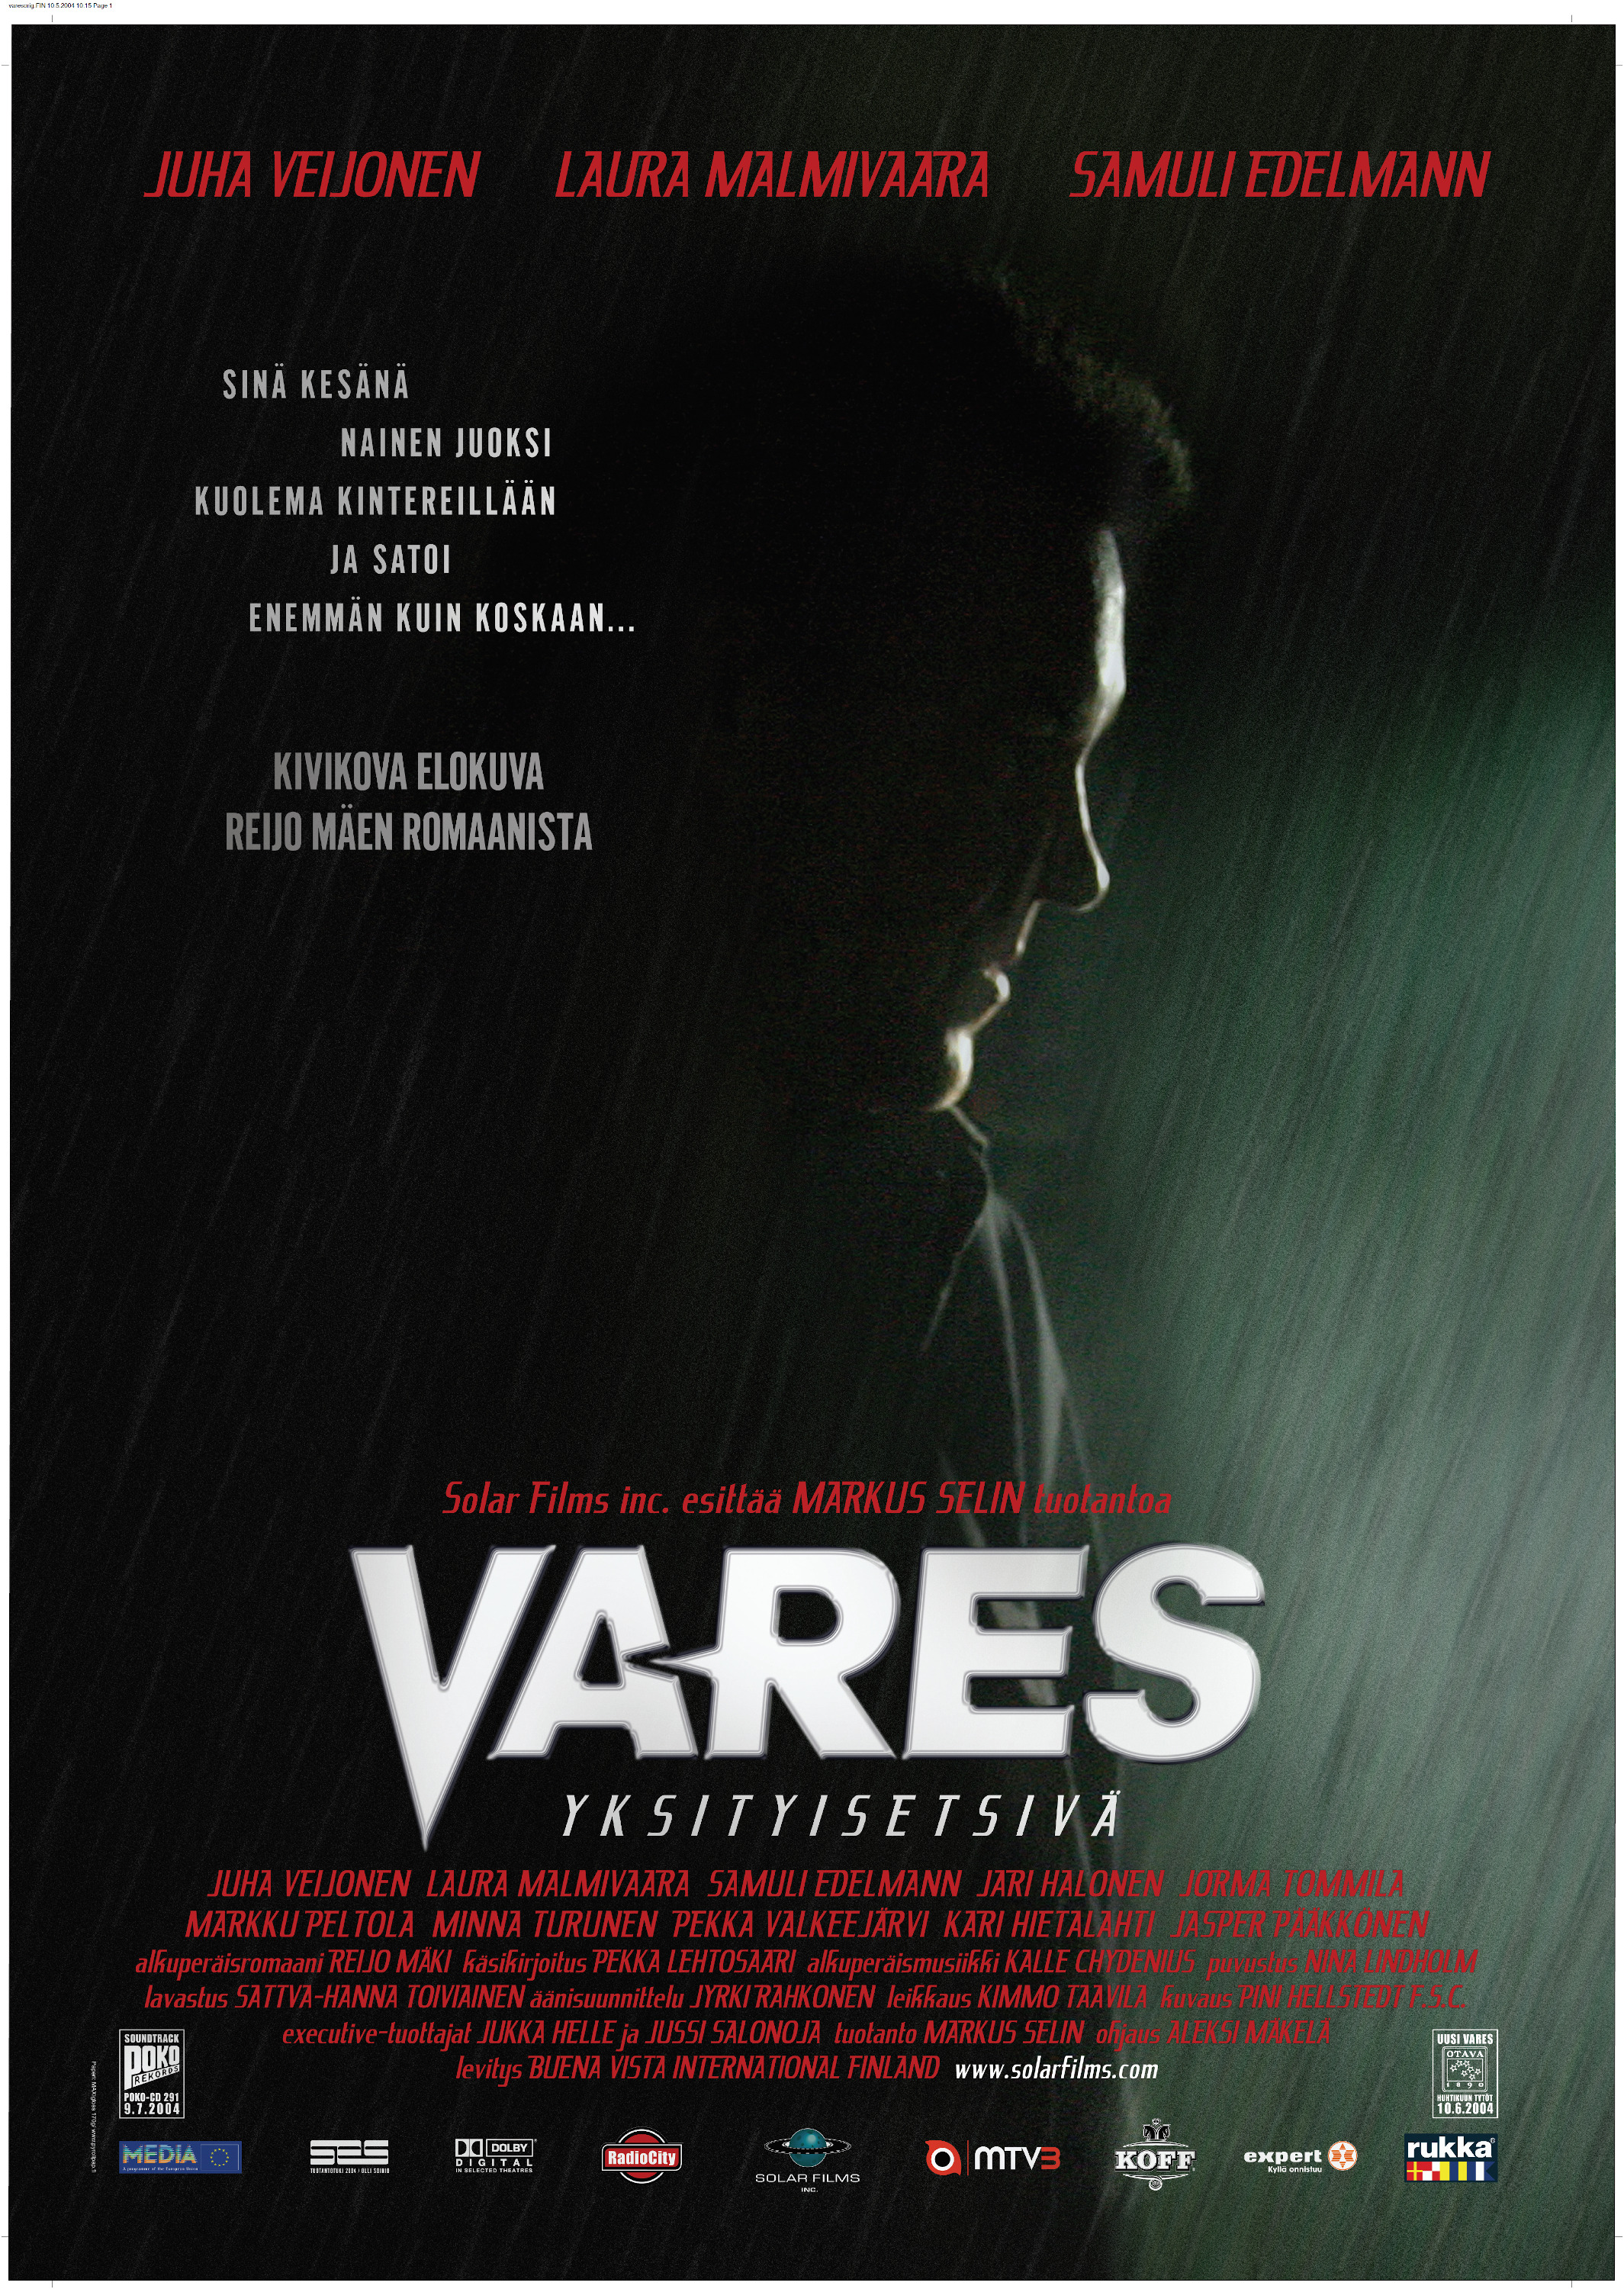 Mega Sized Movie Poster Image for Vares - yksityisetsivä 